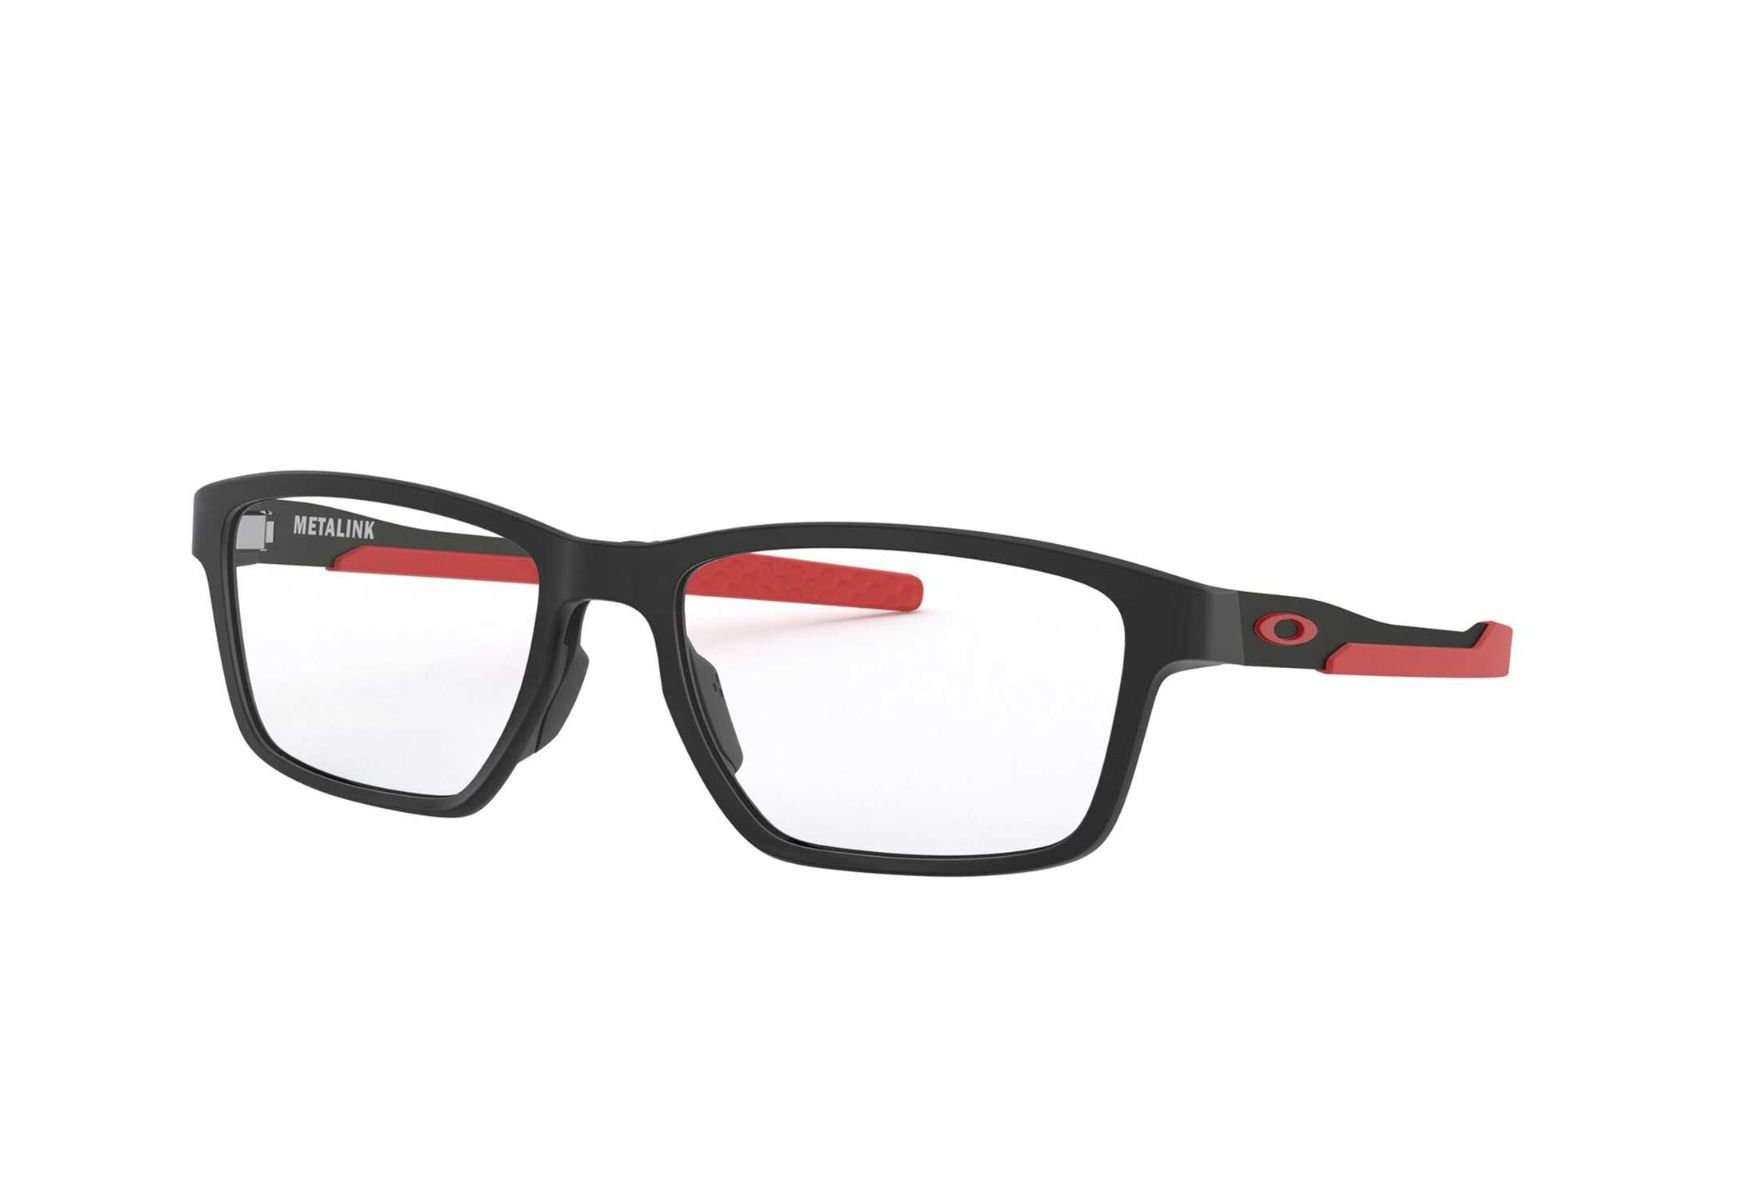 Oakley briller - Metalink - Mønstret, Blå, Large Hel ramme i Metall, Plast - Rektangulære